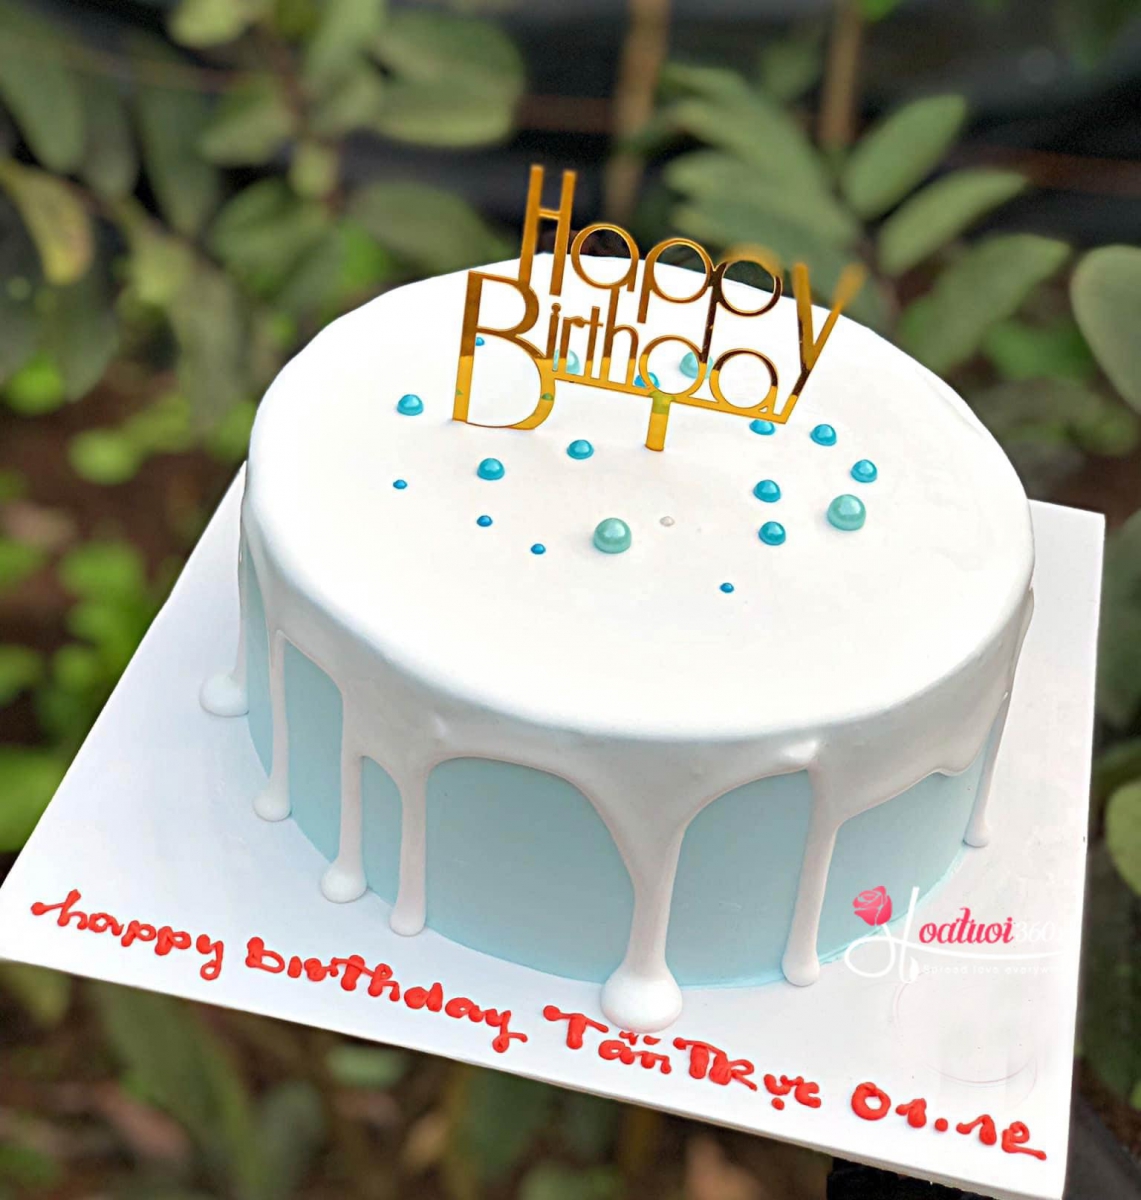 Birthday cake - Blue sky